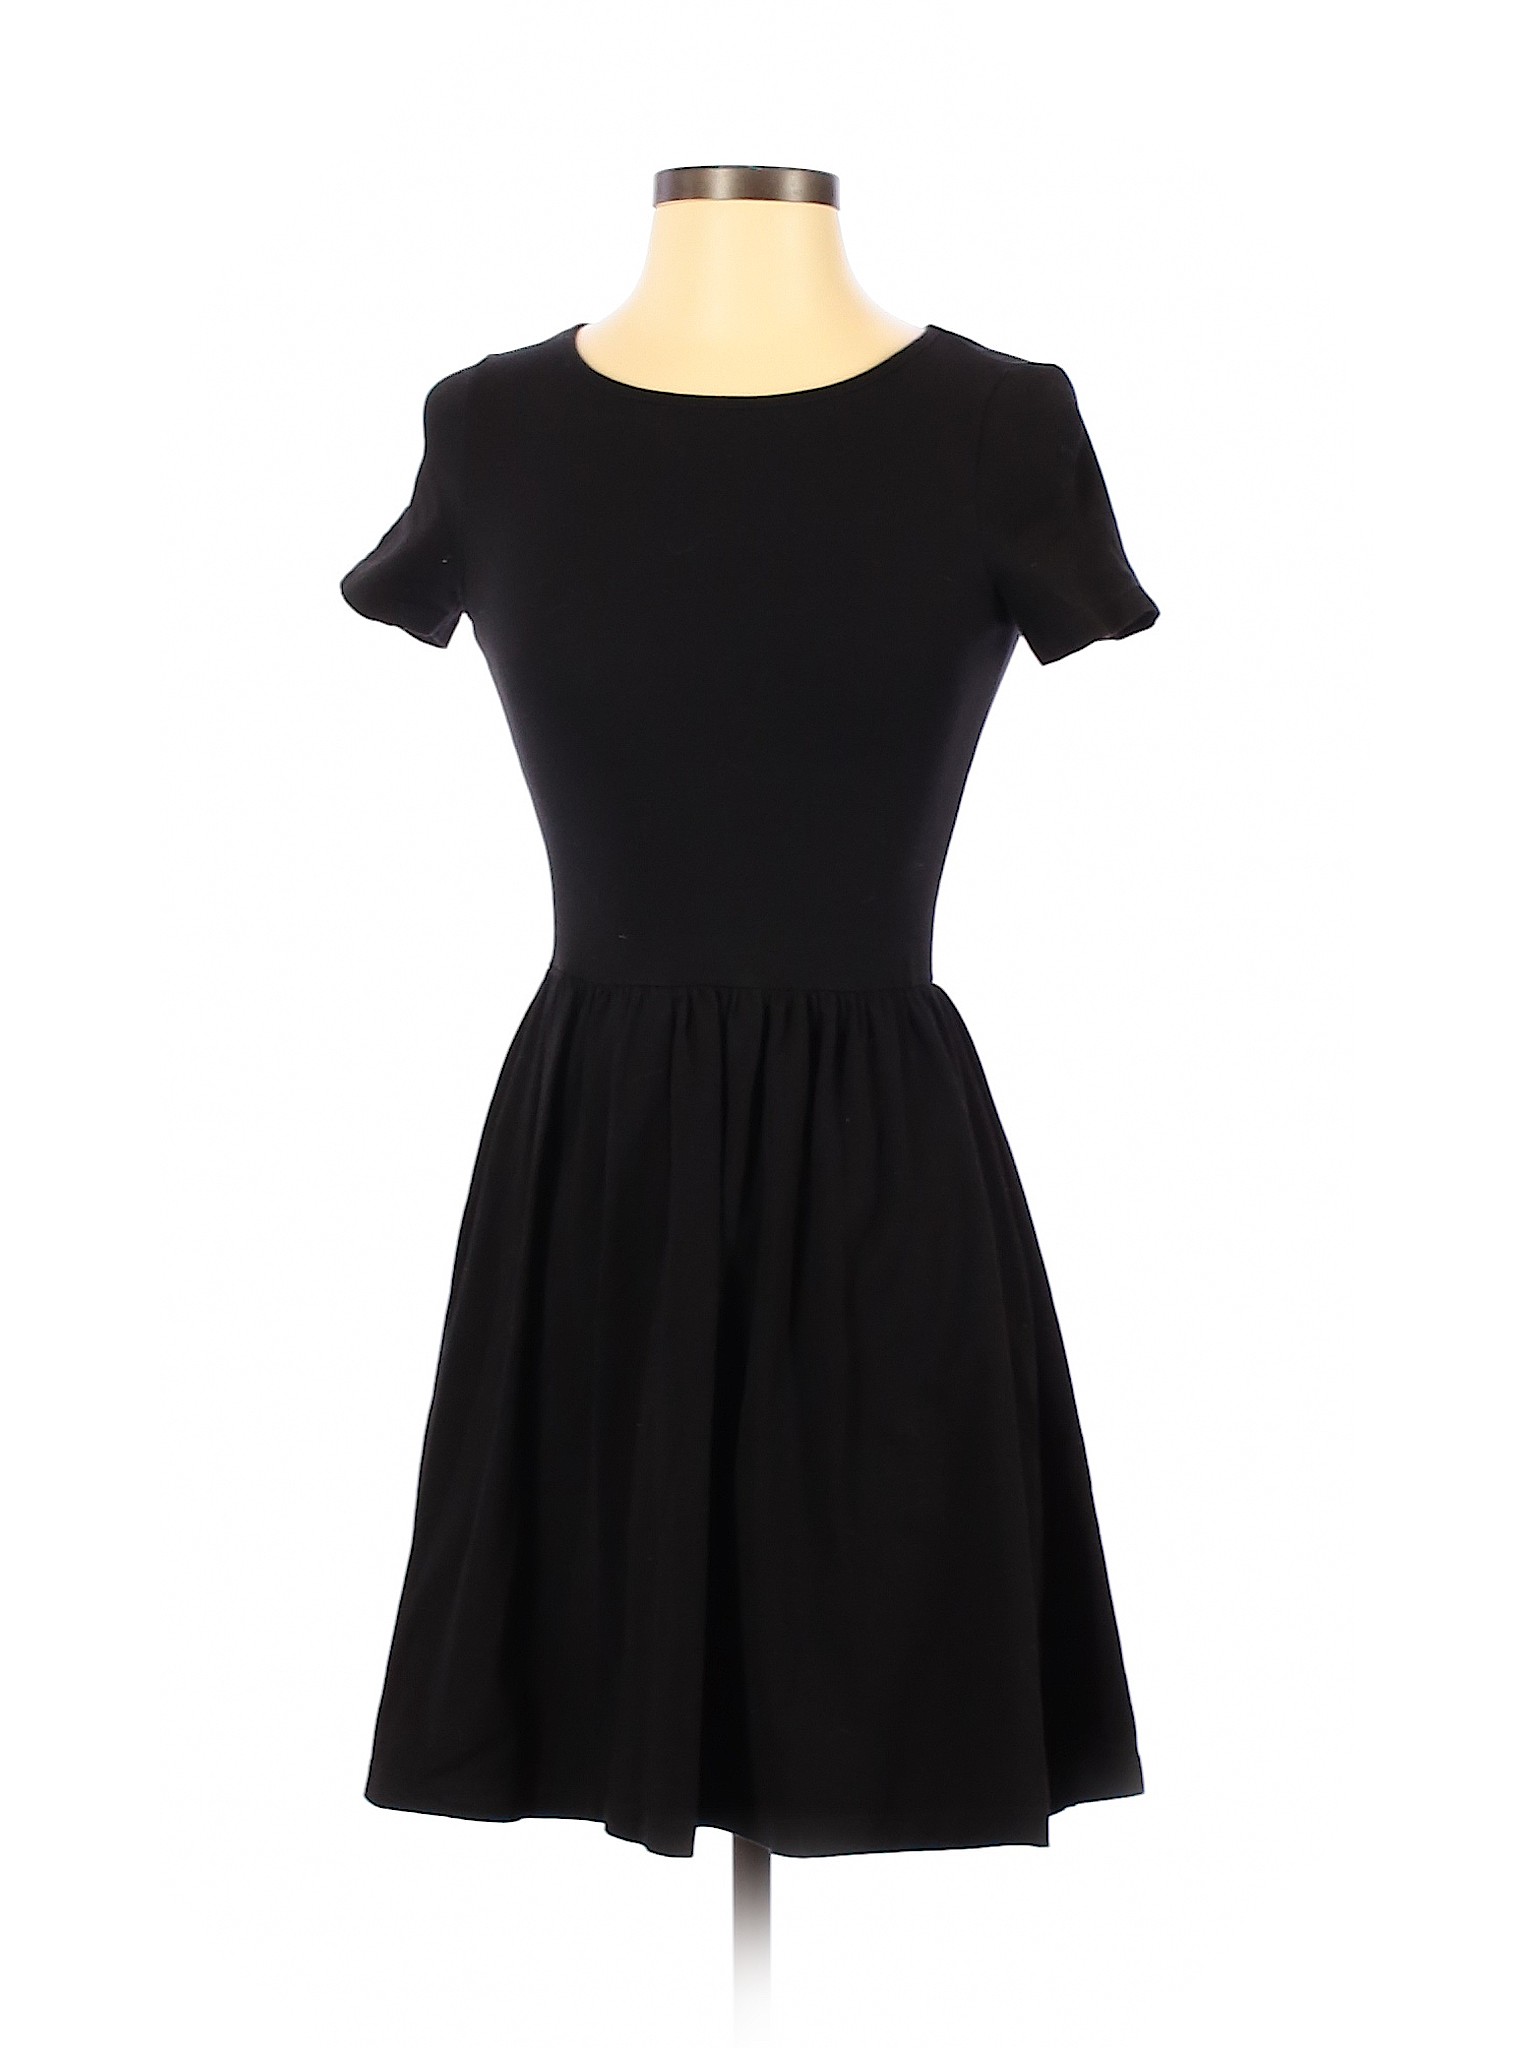 ASOS Women Black Casual Dress 2 | eBay